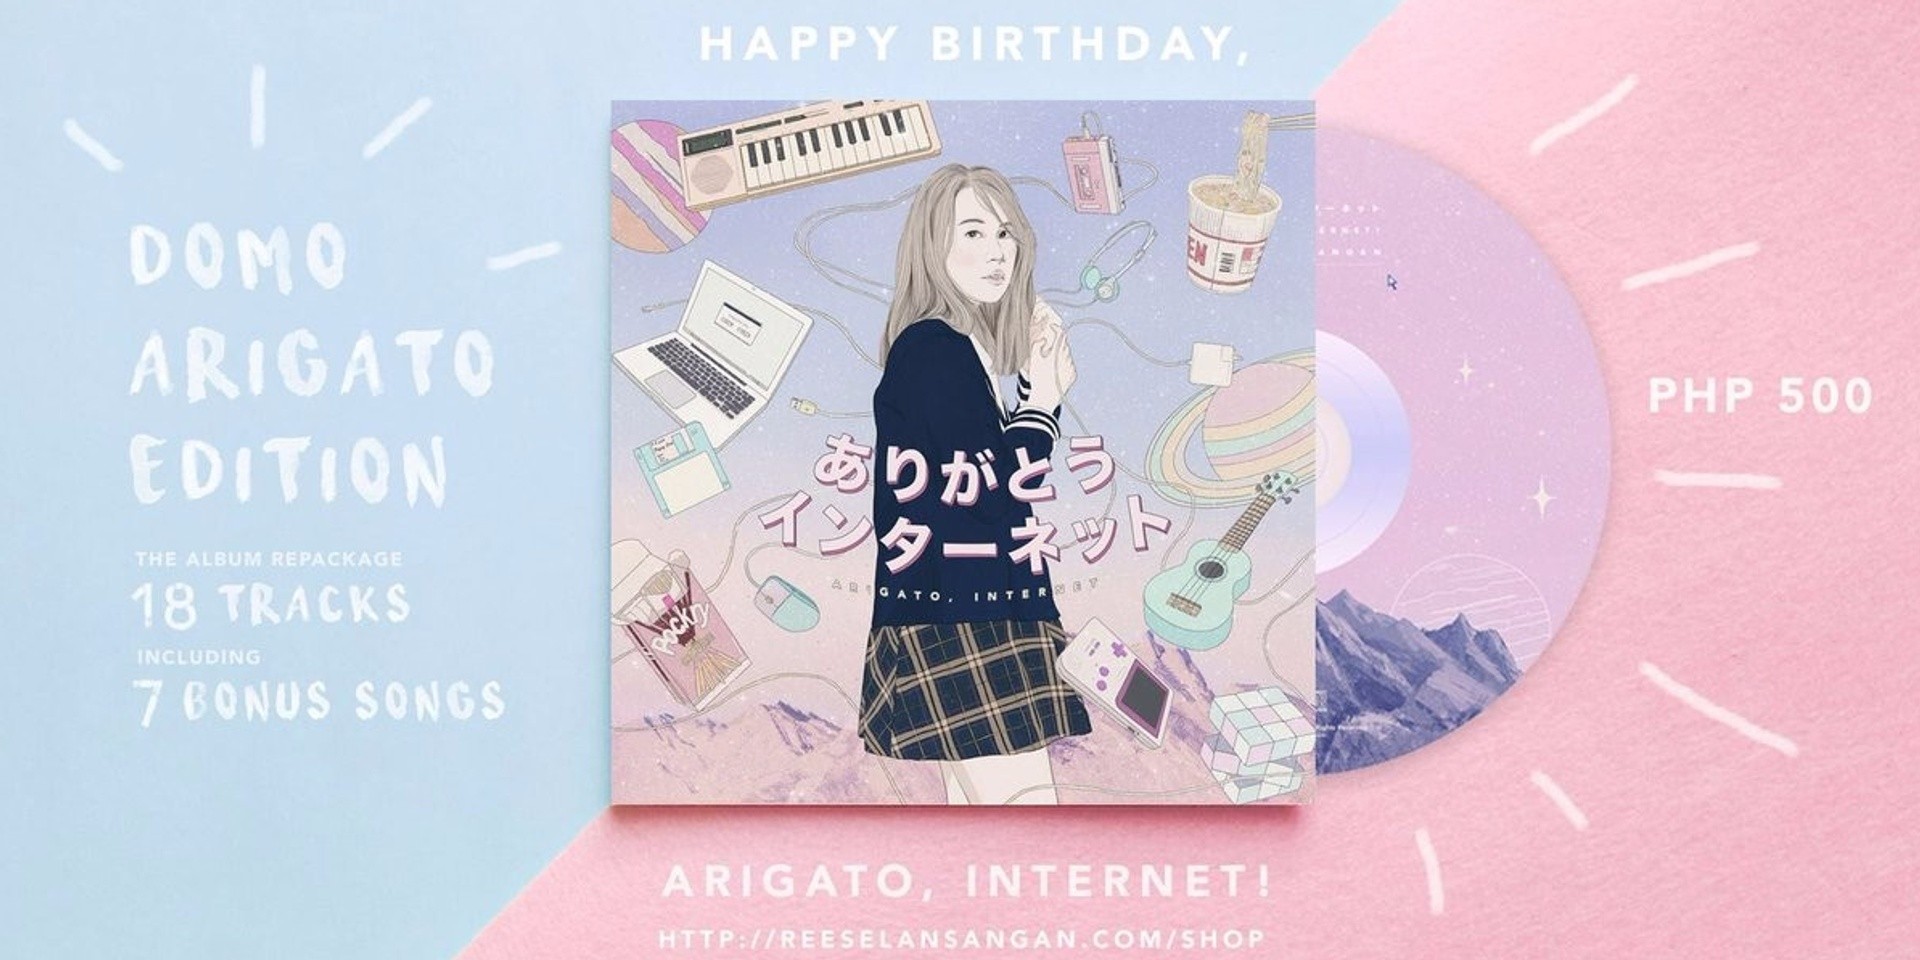 Reese Lansangan announces "Arigato, Internet!" reissue, plus a new line of merchandise 